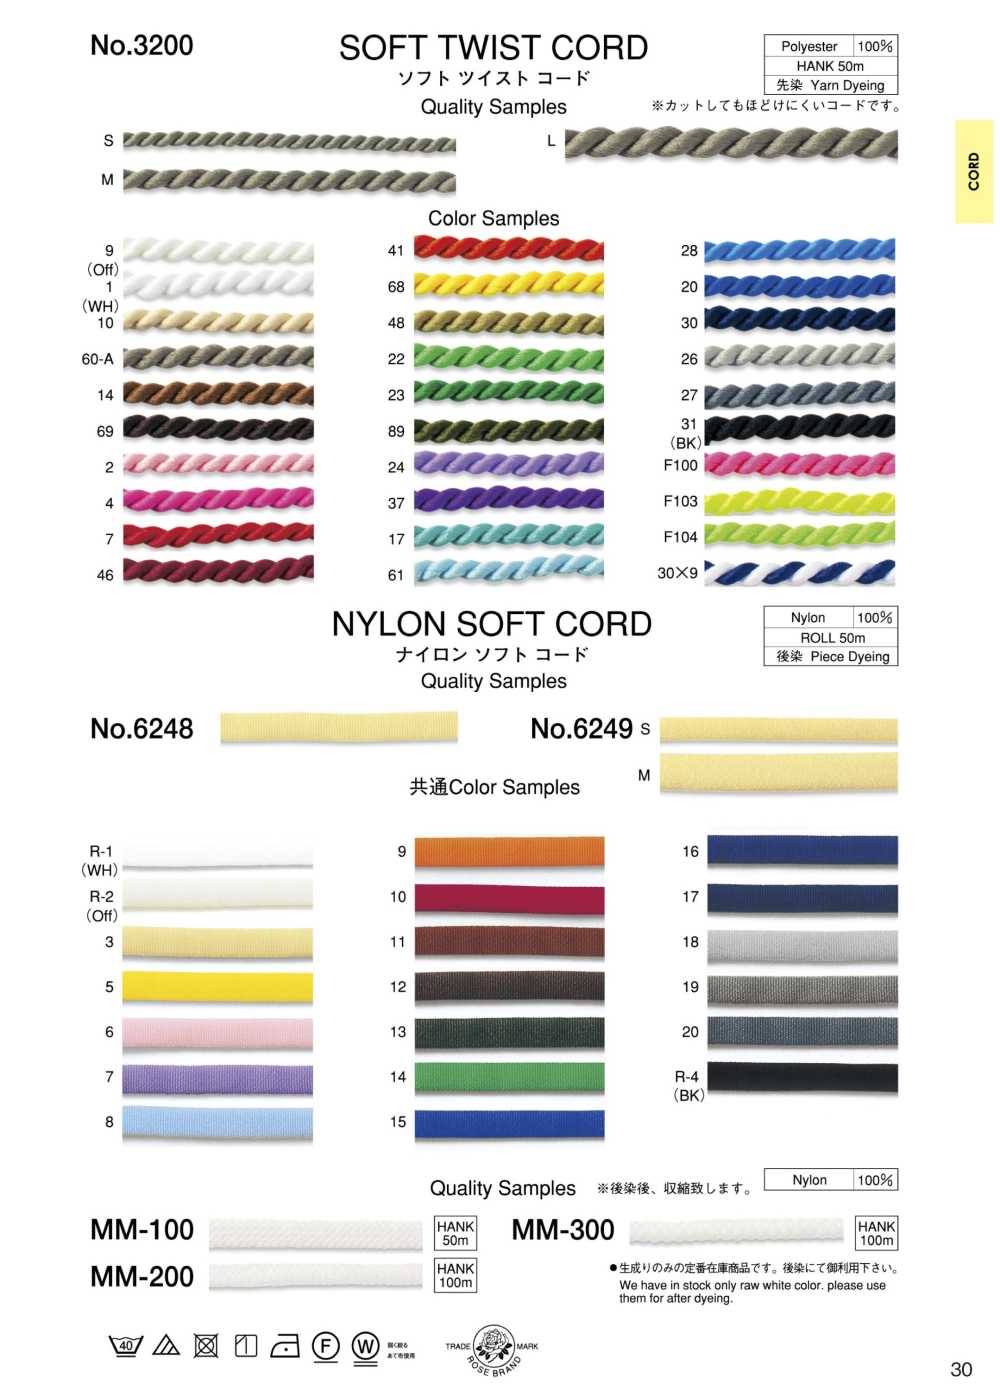 6248 Nylon Soft Cord[Ribbon Tape Cord] ROSE BRAND (Marushin)